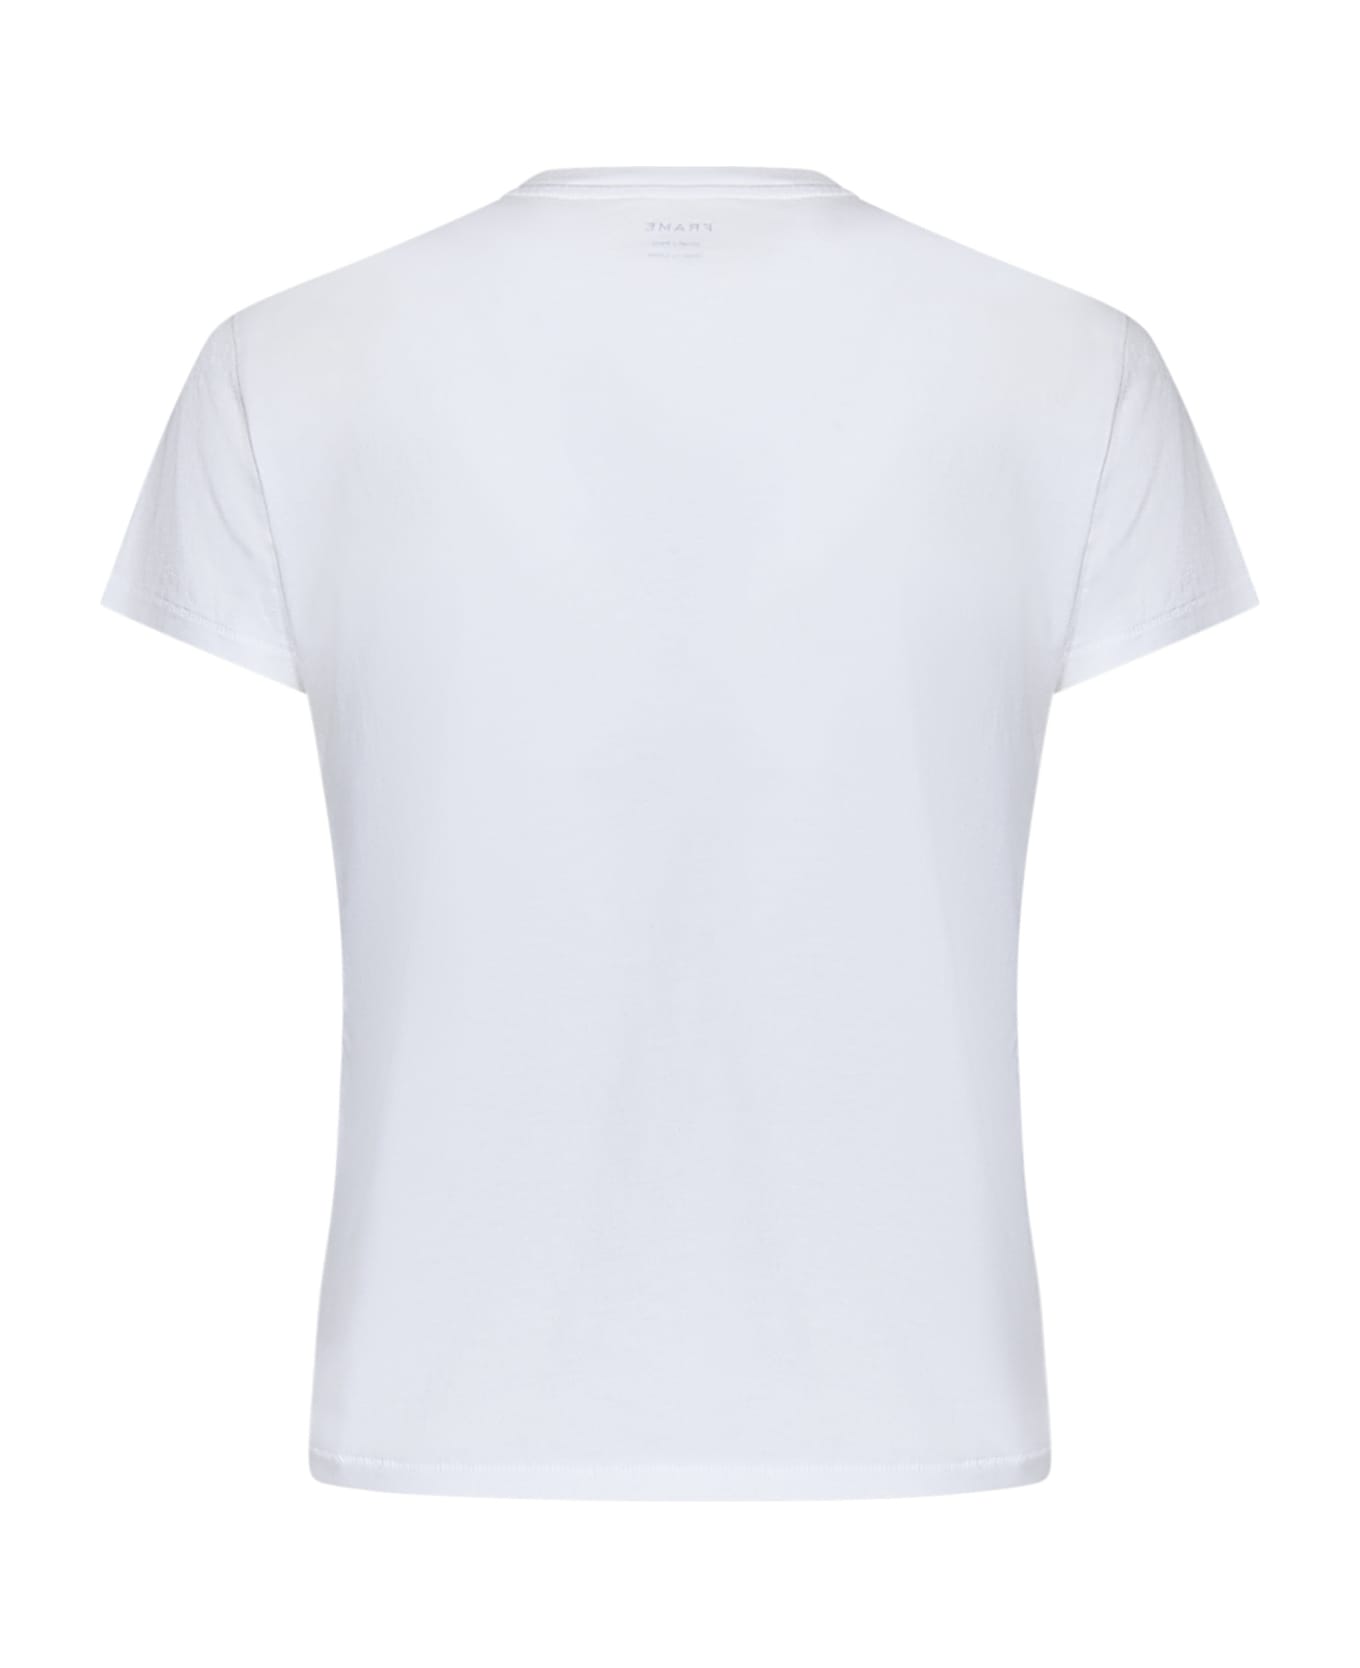 Frame Baby Tee T-shirt - Wht White